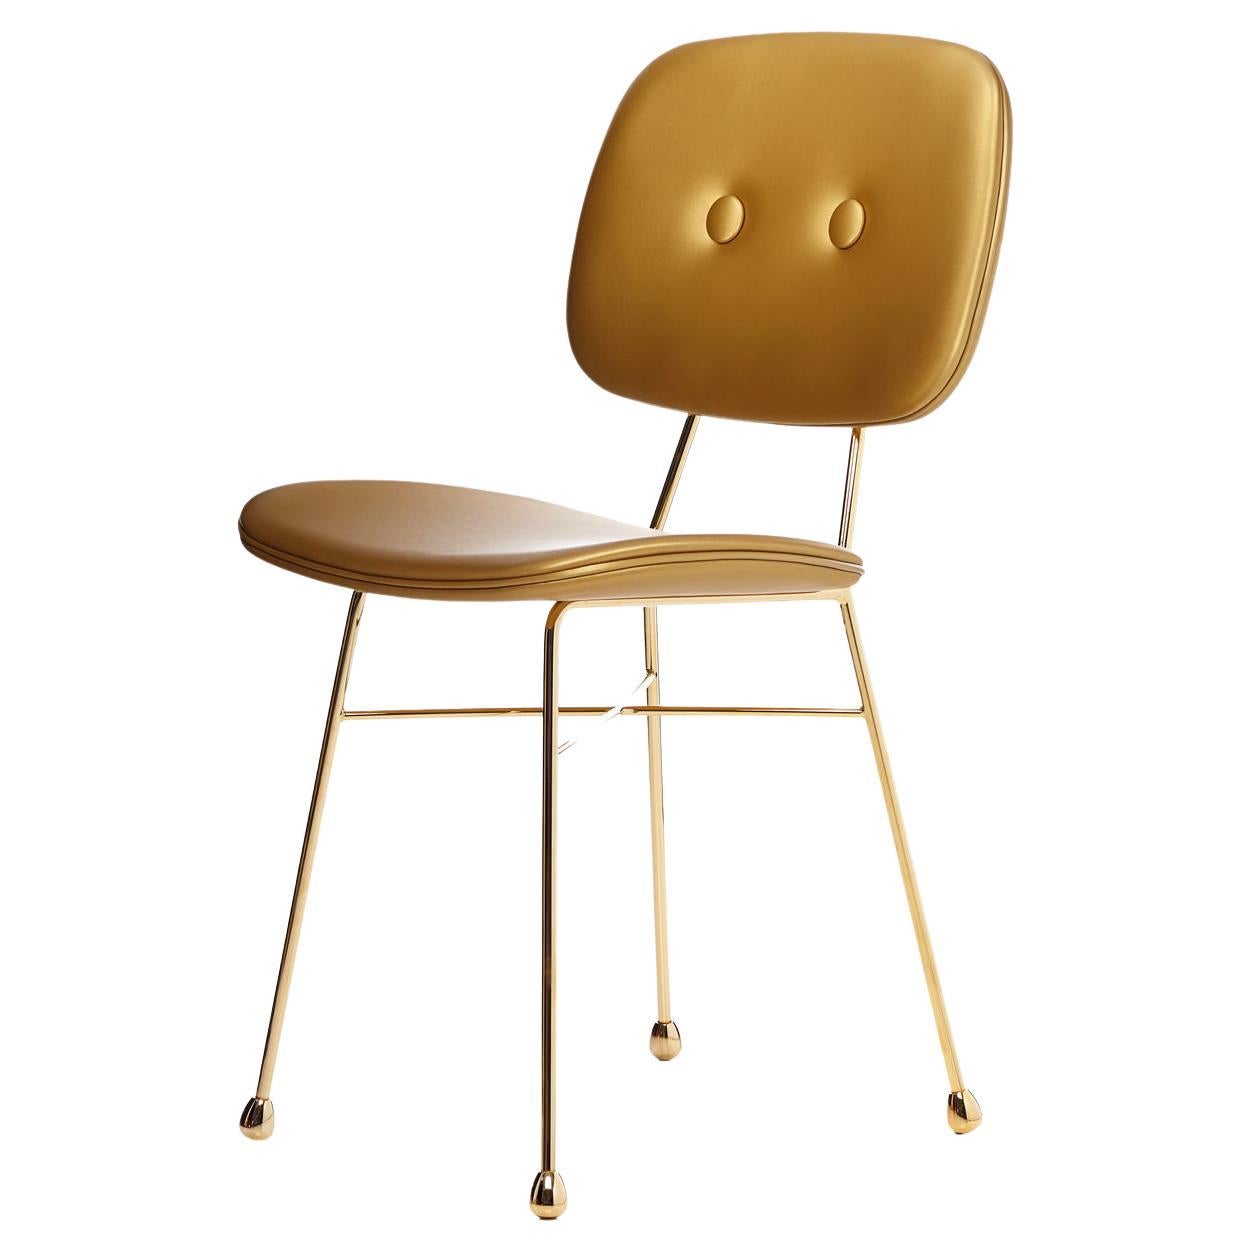 Moooi The Golden Chair in Matt Golden Steel Frame and Upholstery